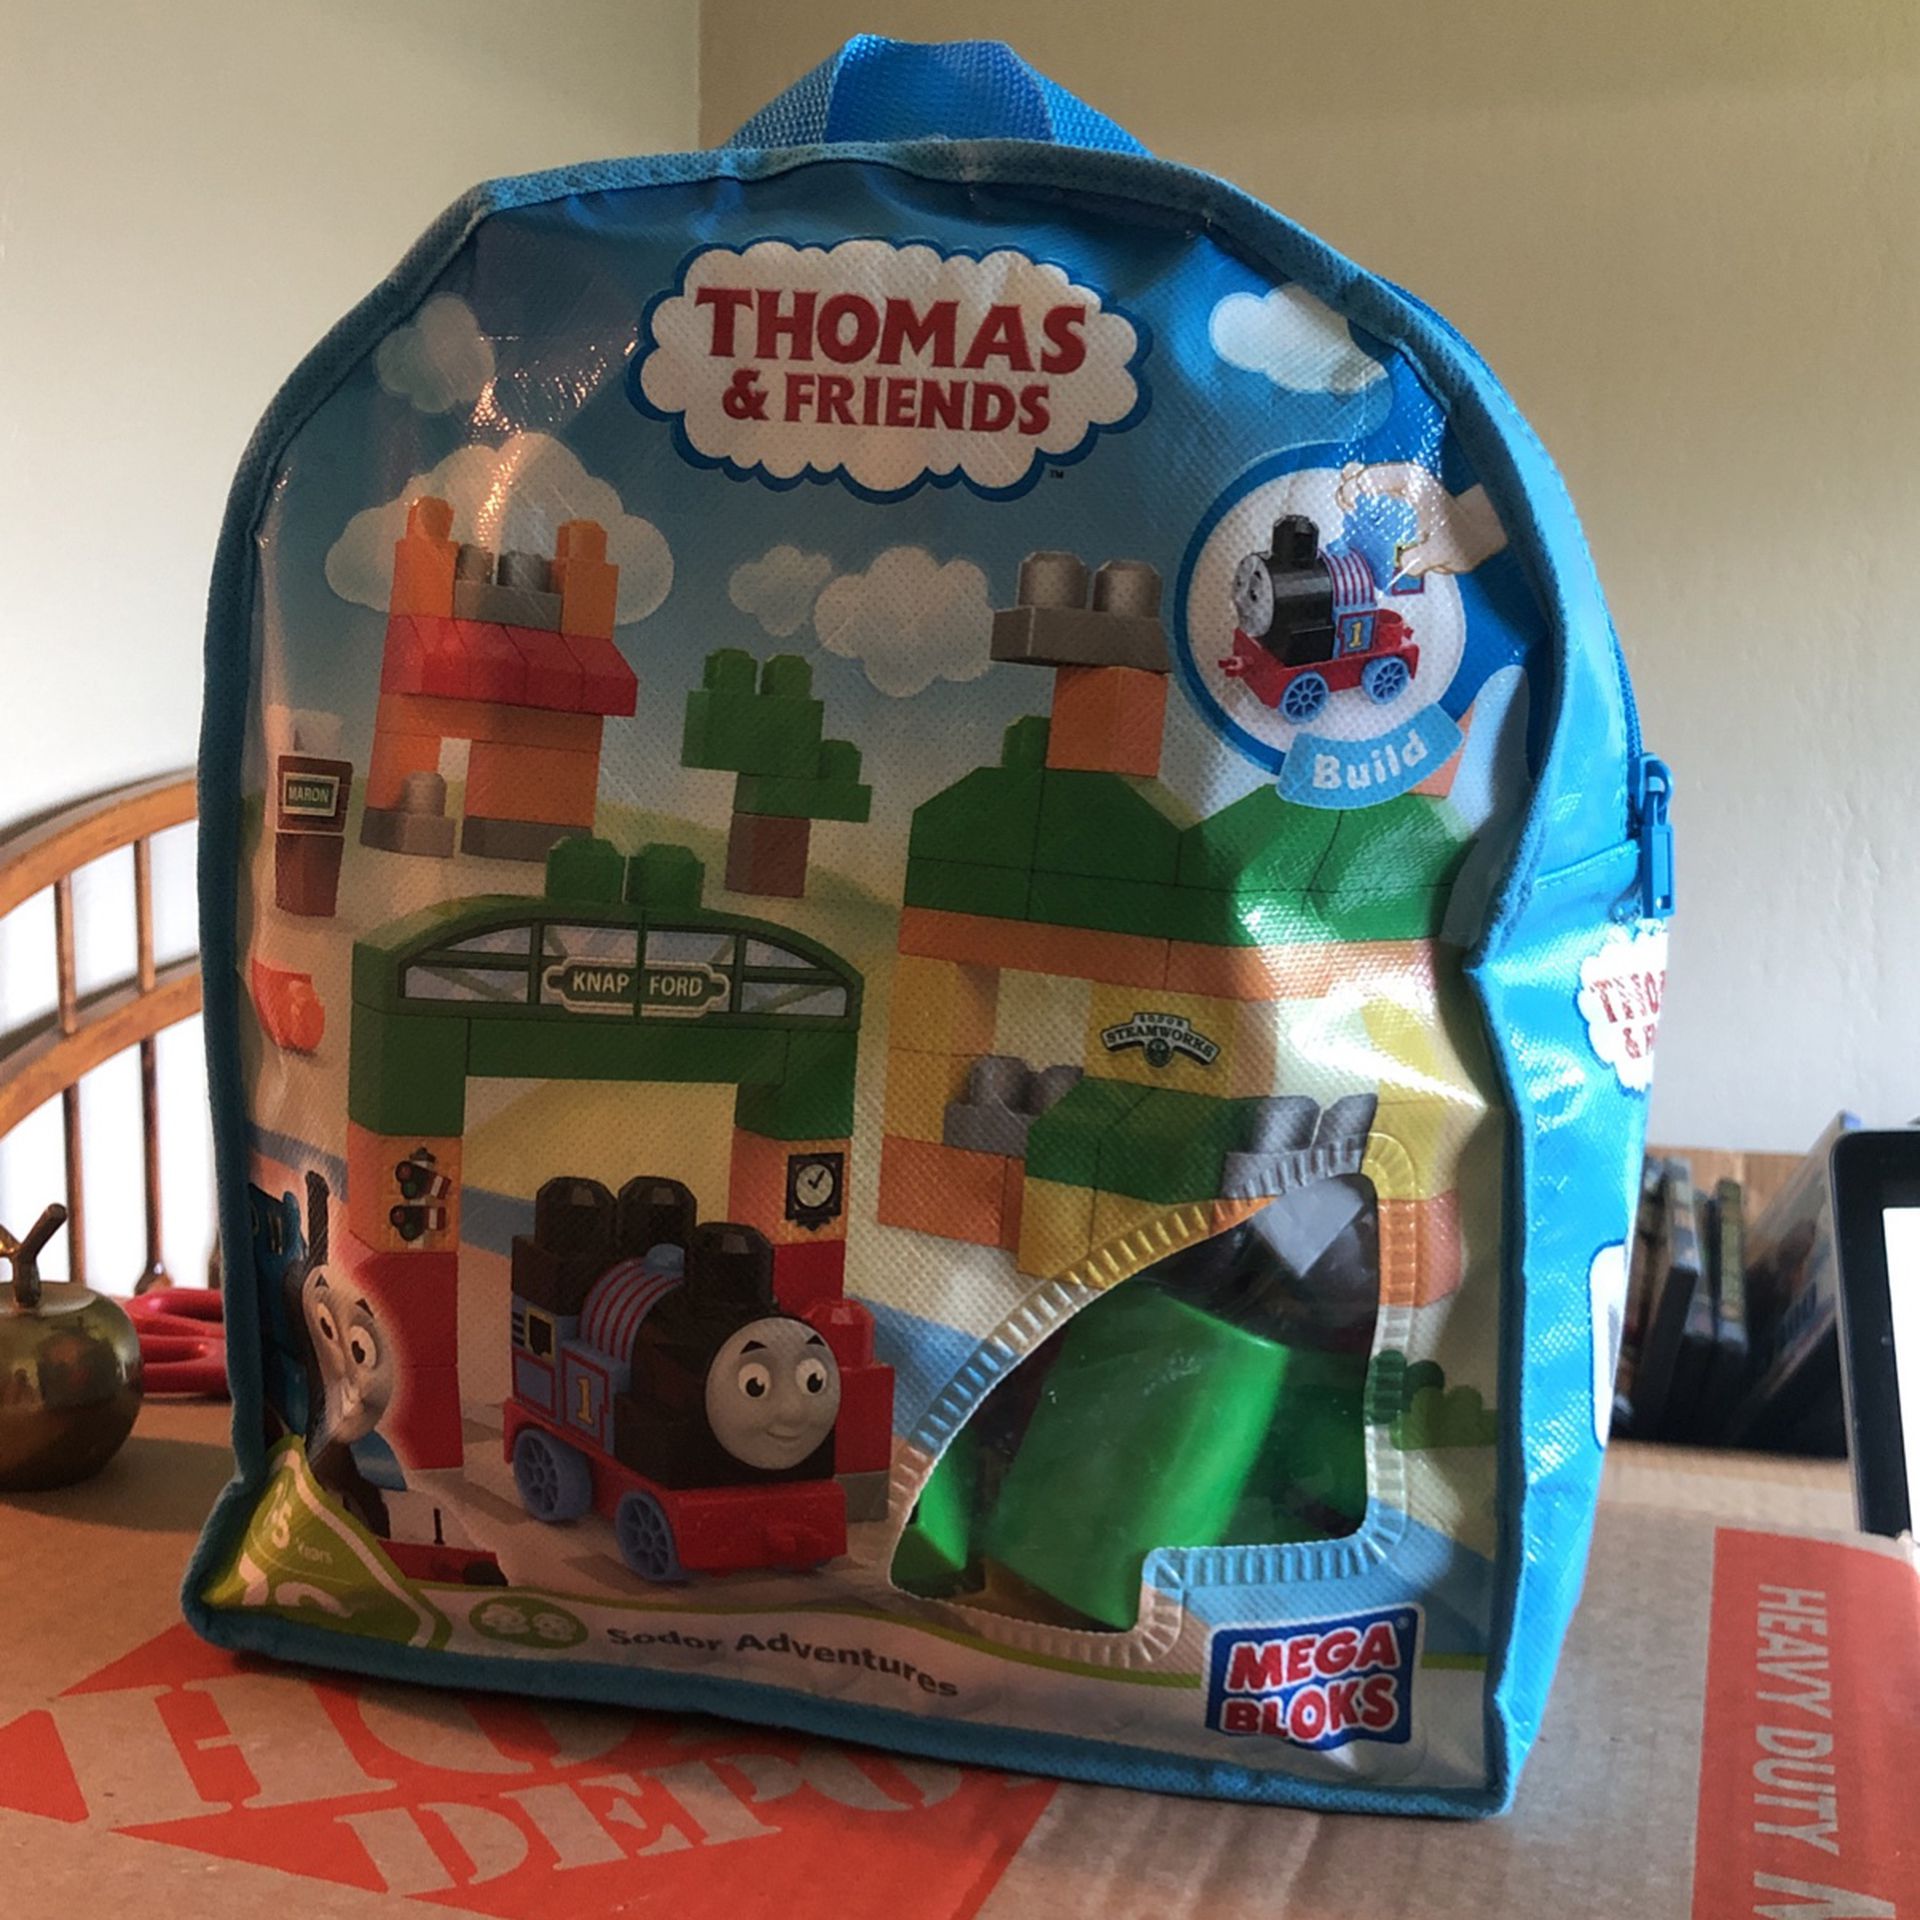 Thomas & Friends Mega Blocks